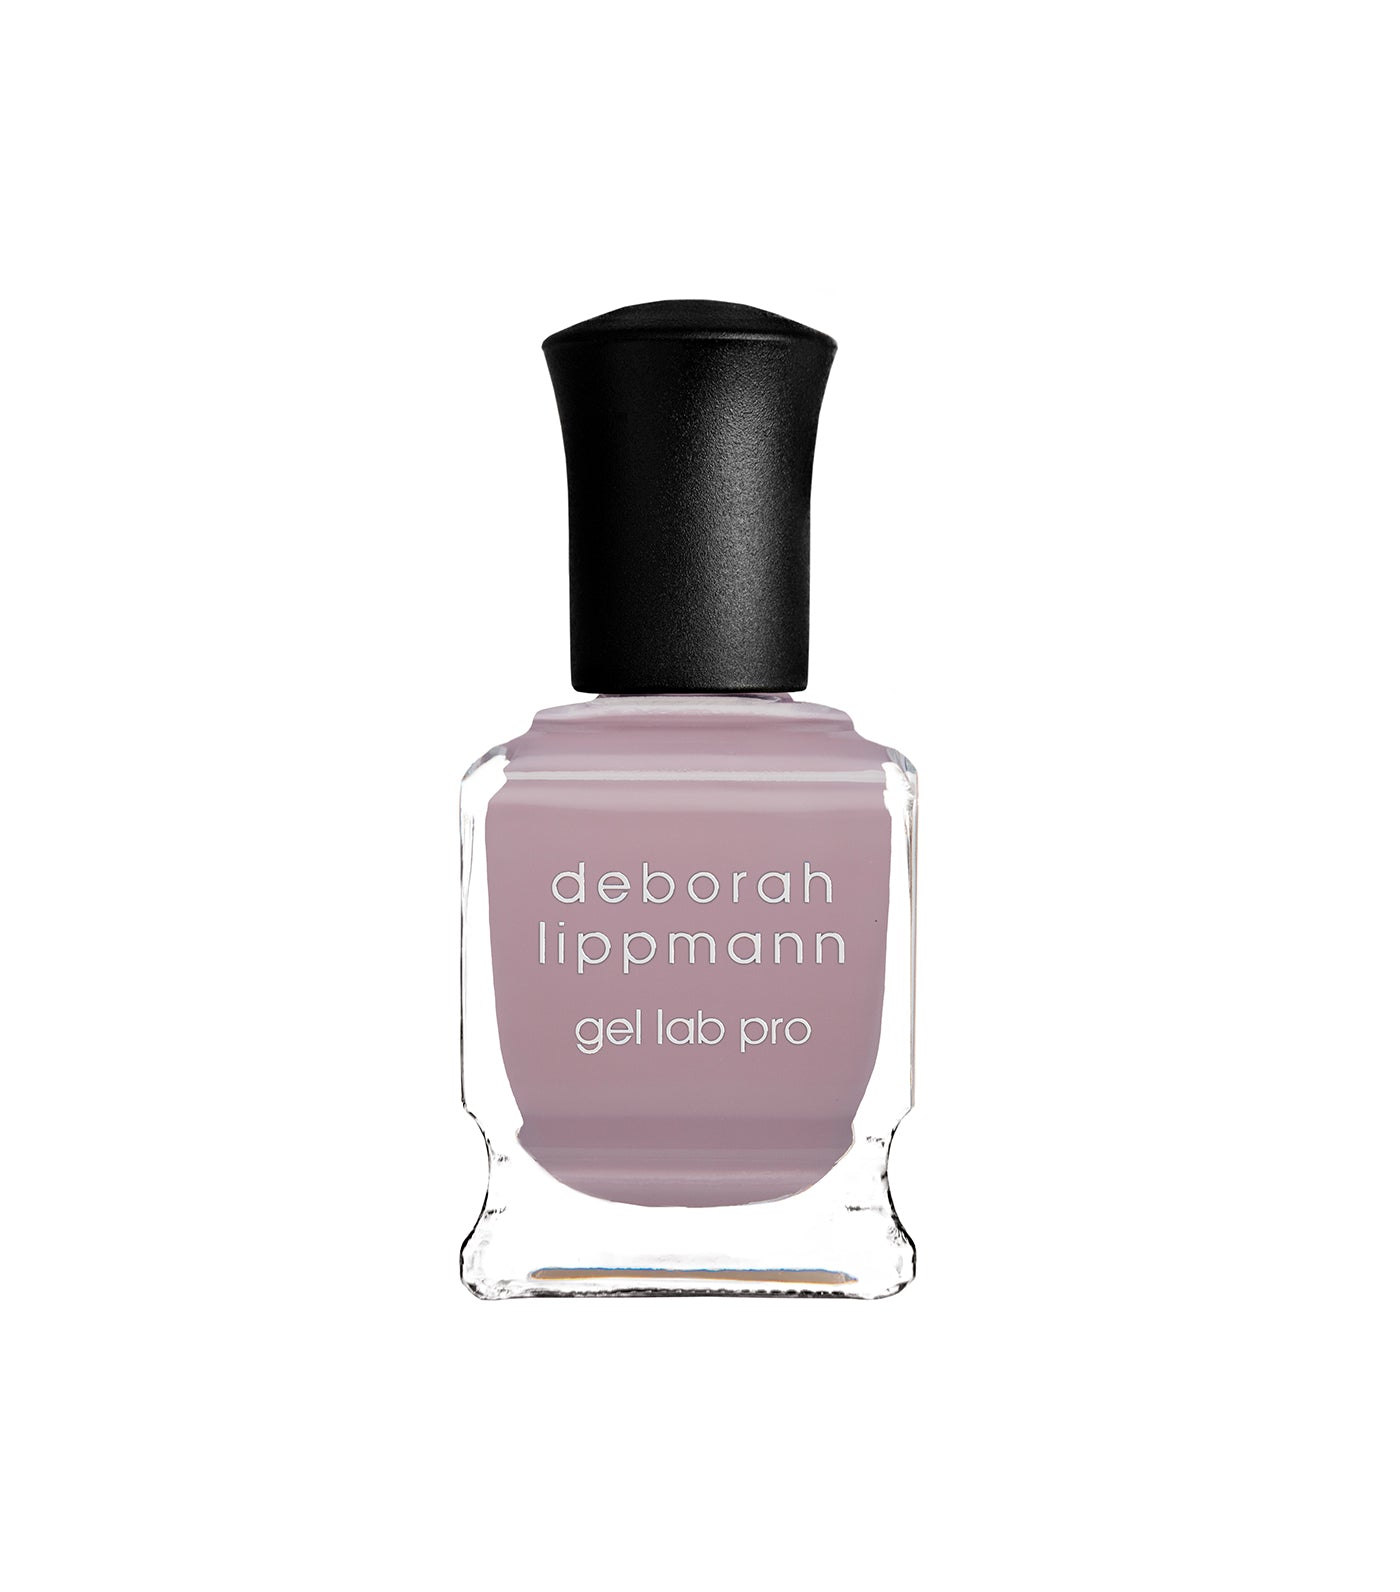 deborah lippmann gel lab pro nail polish - spring collection punch drunk love